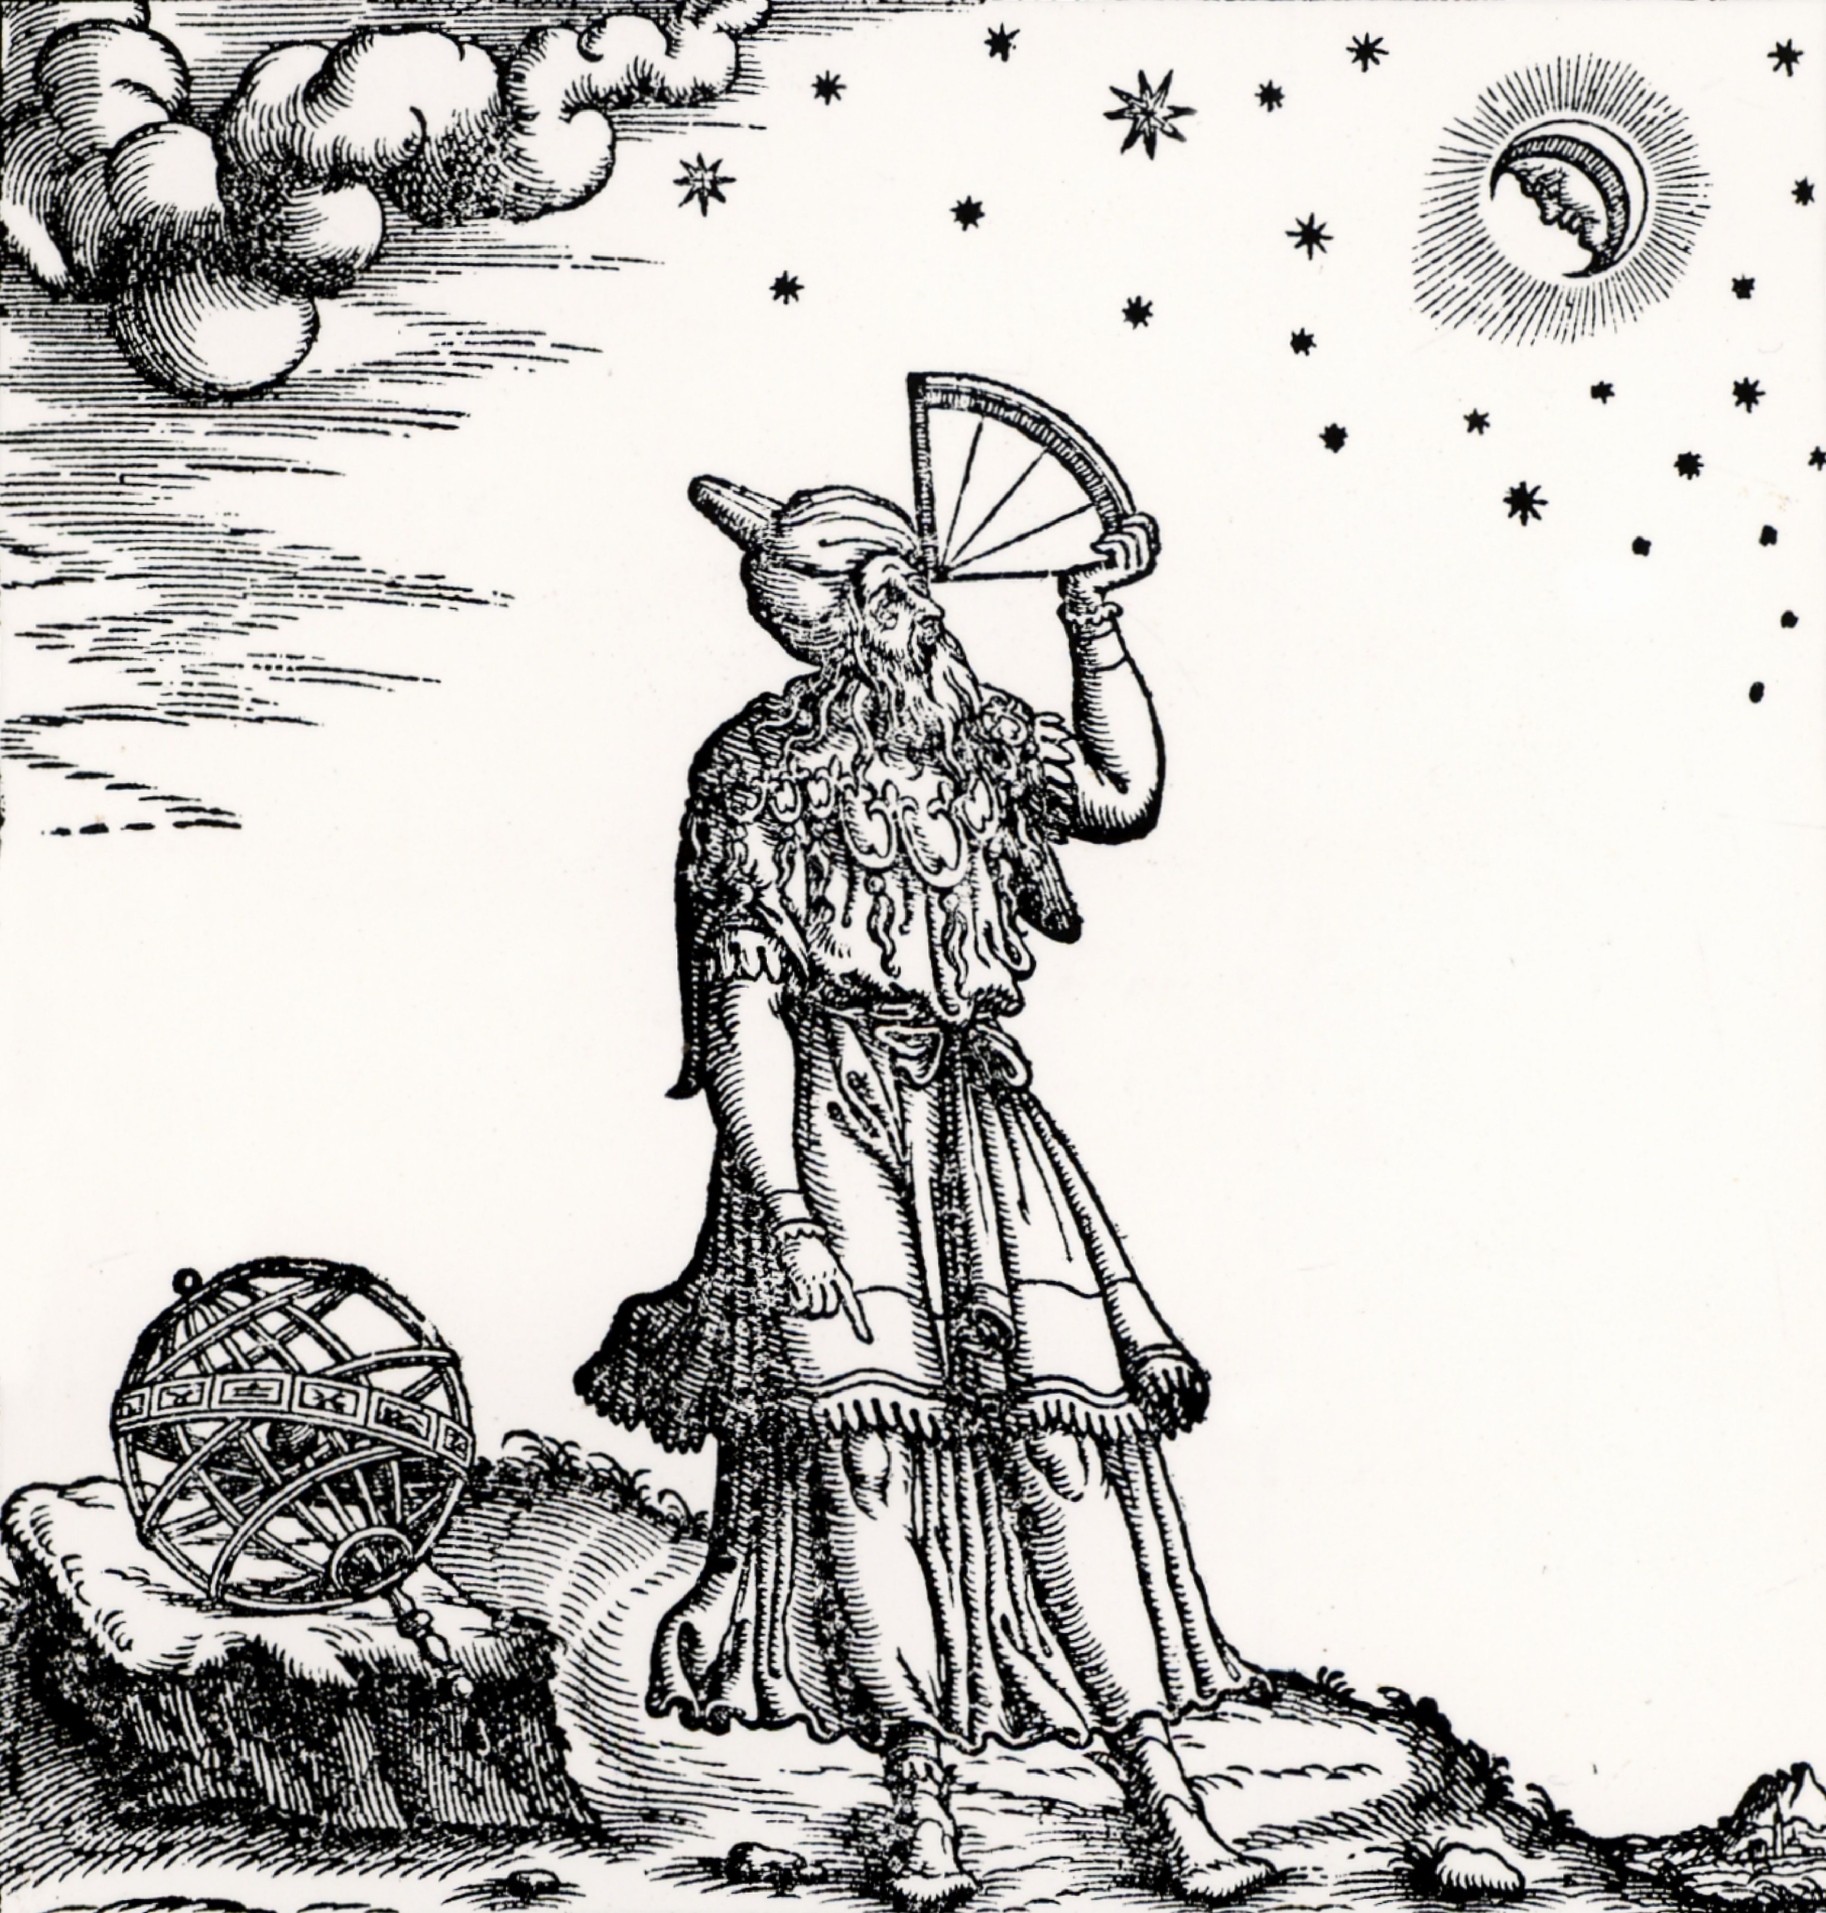 The Greek astronomer Claudius Ptolomy